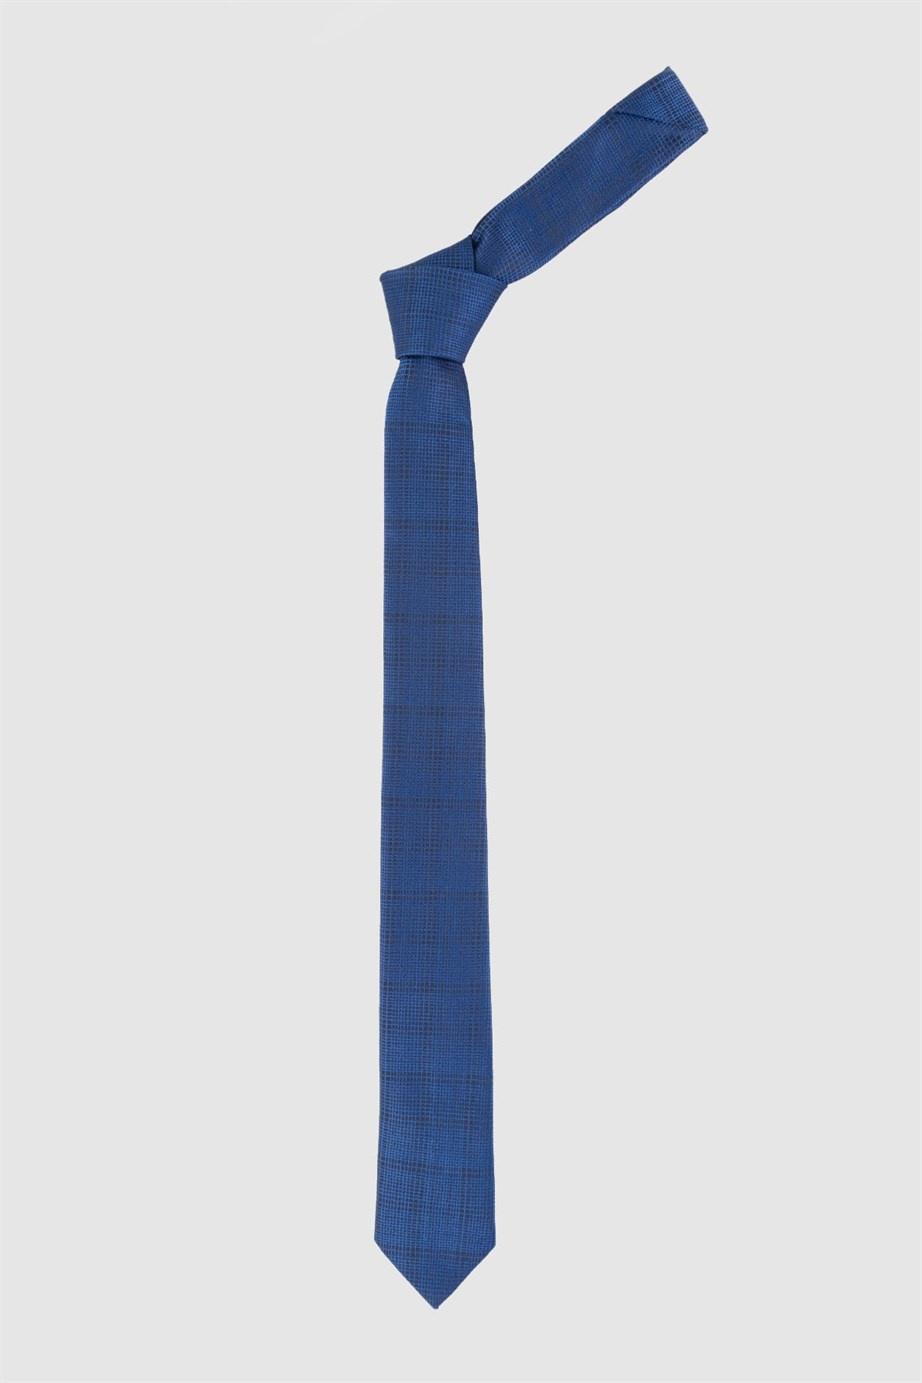 Selected image for TUDORS Karirana uža kravata plava